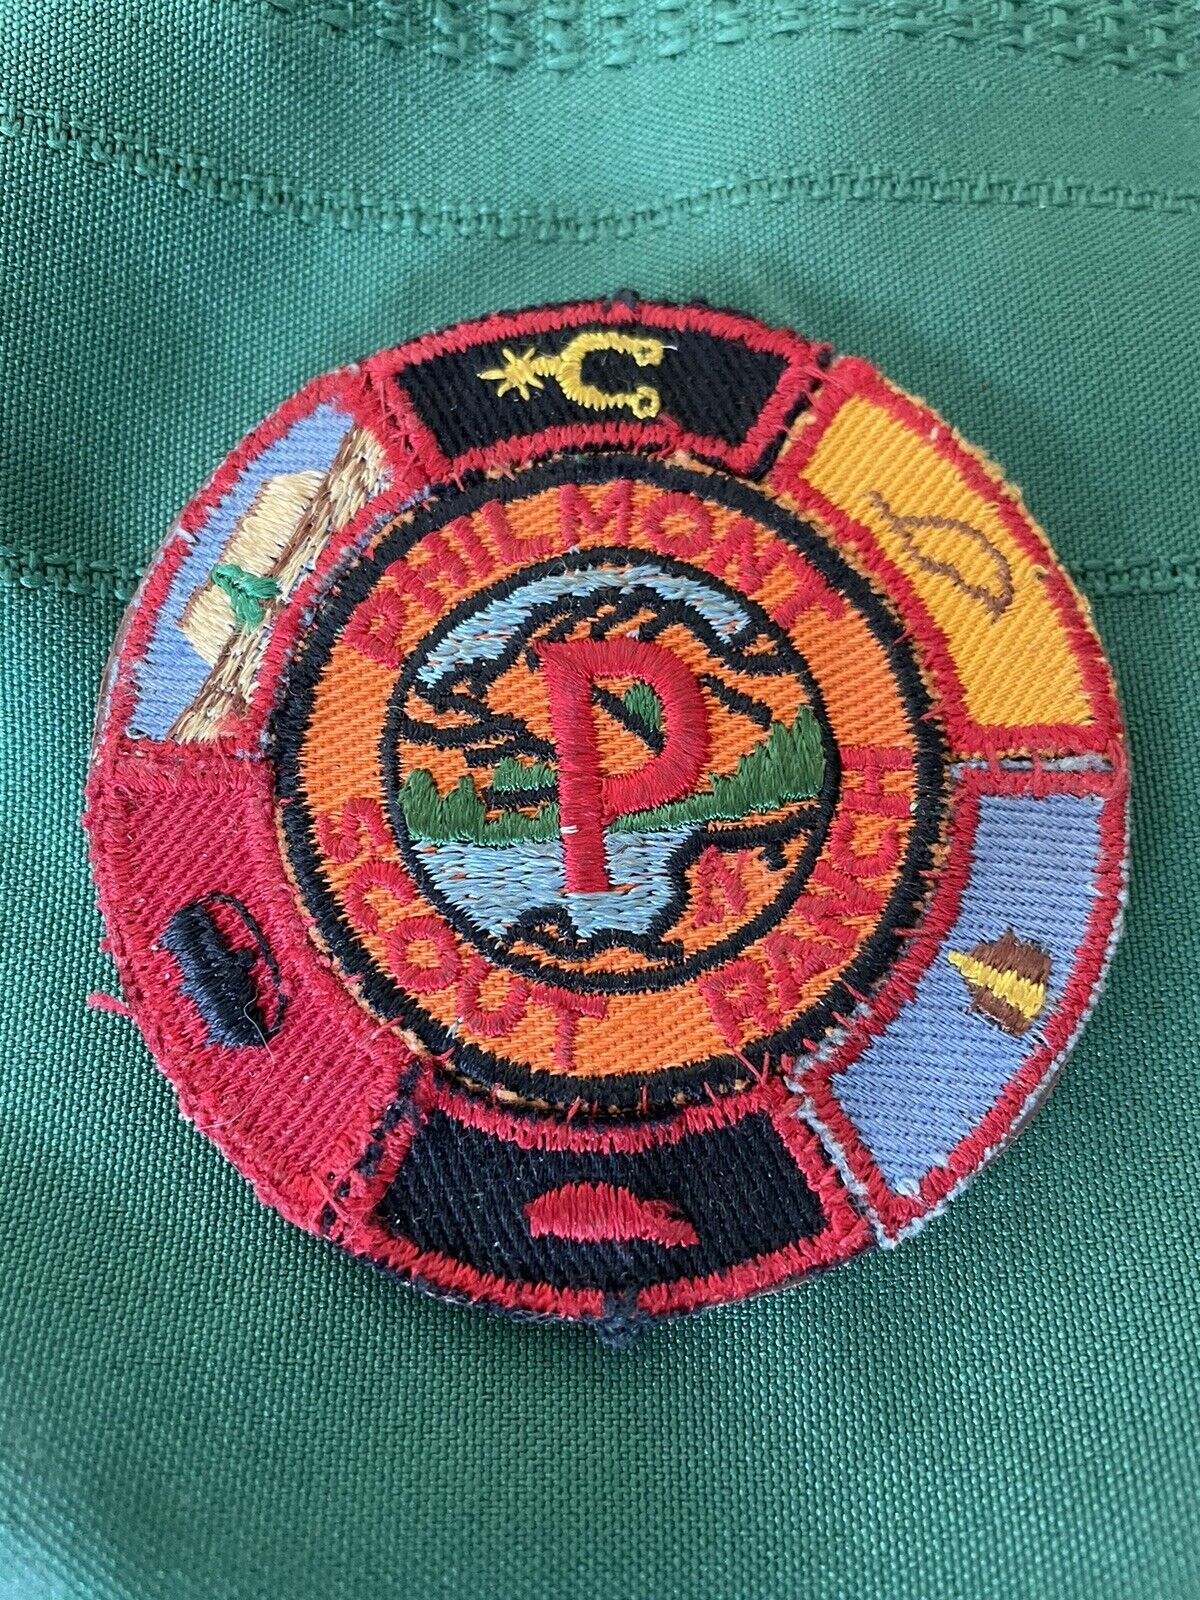 Vintage 1950’s PHILMONT RANCH Boy Scout DOLLAR PATCH & Camp Segments Badge